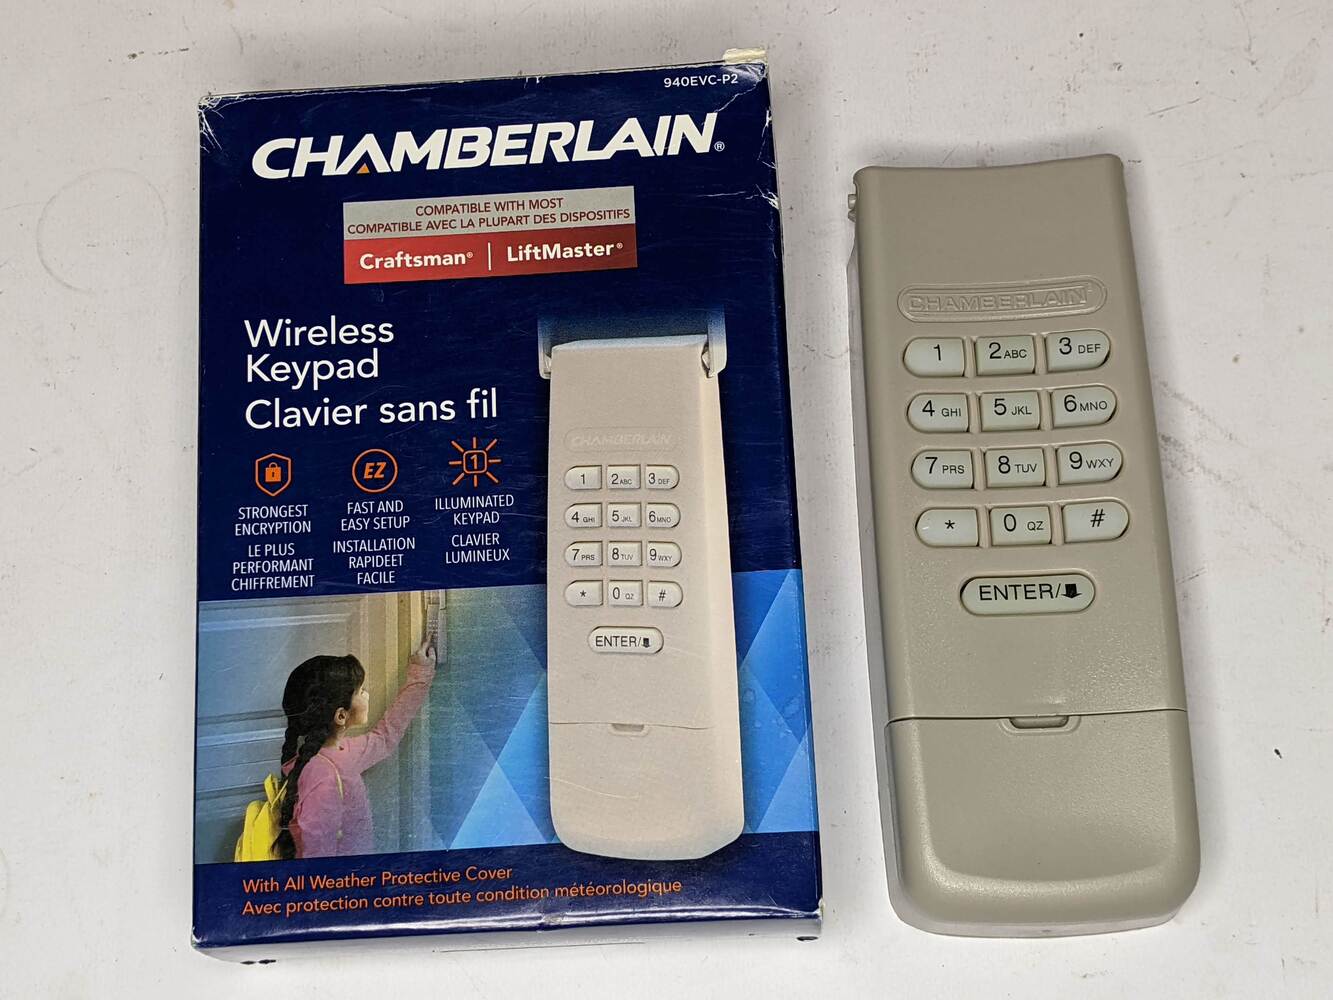 chamberlain wireless keypad program 940ev p2